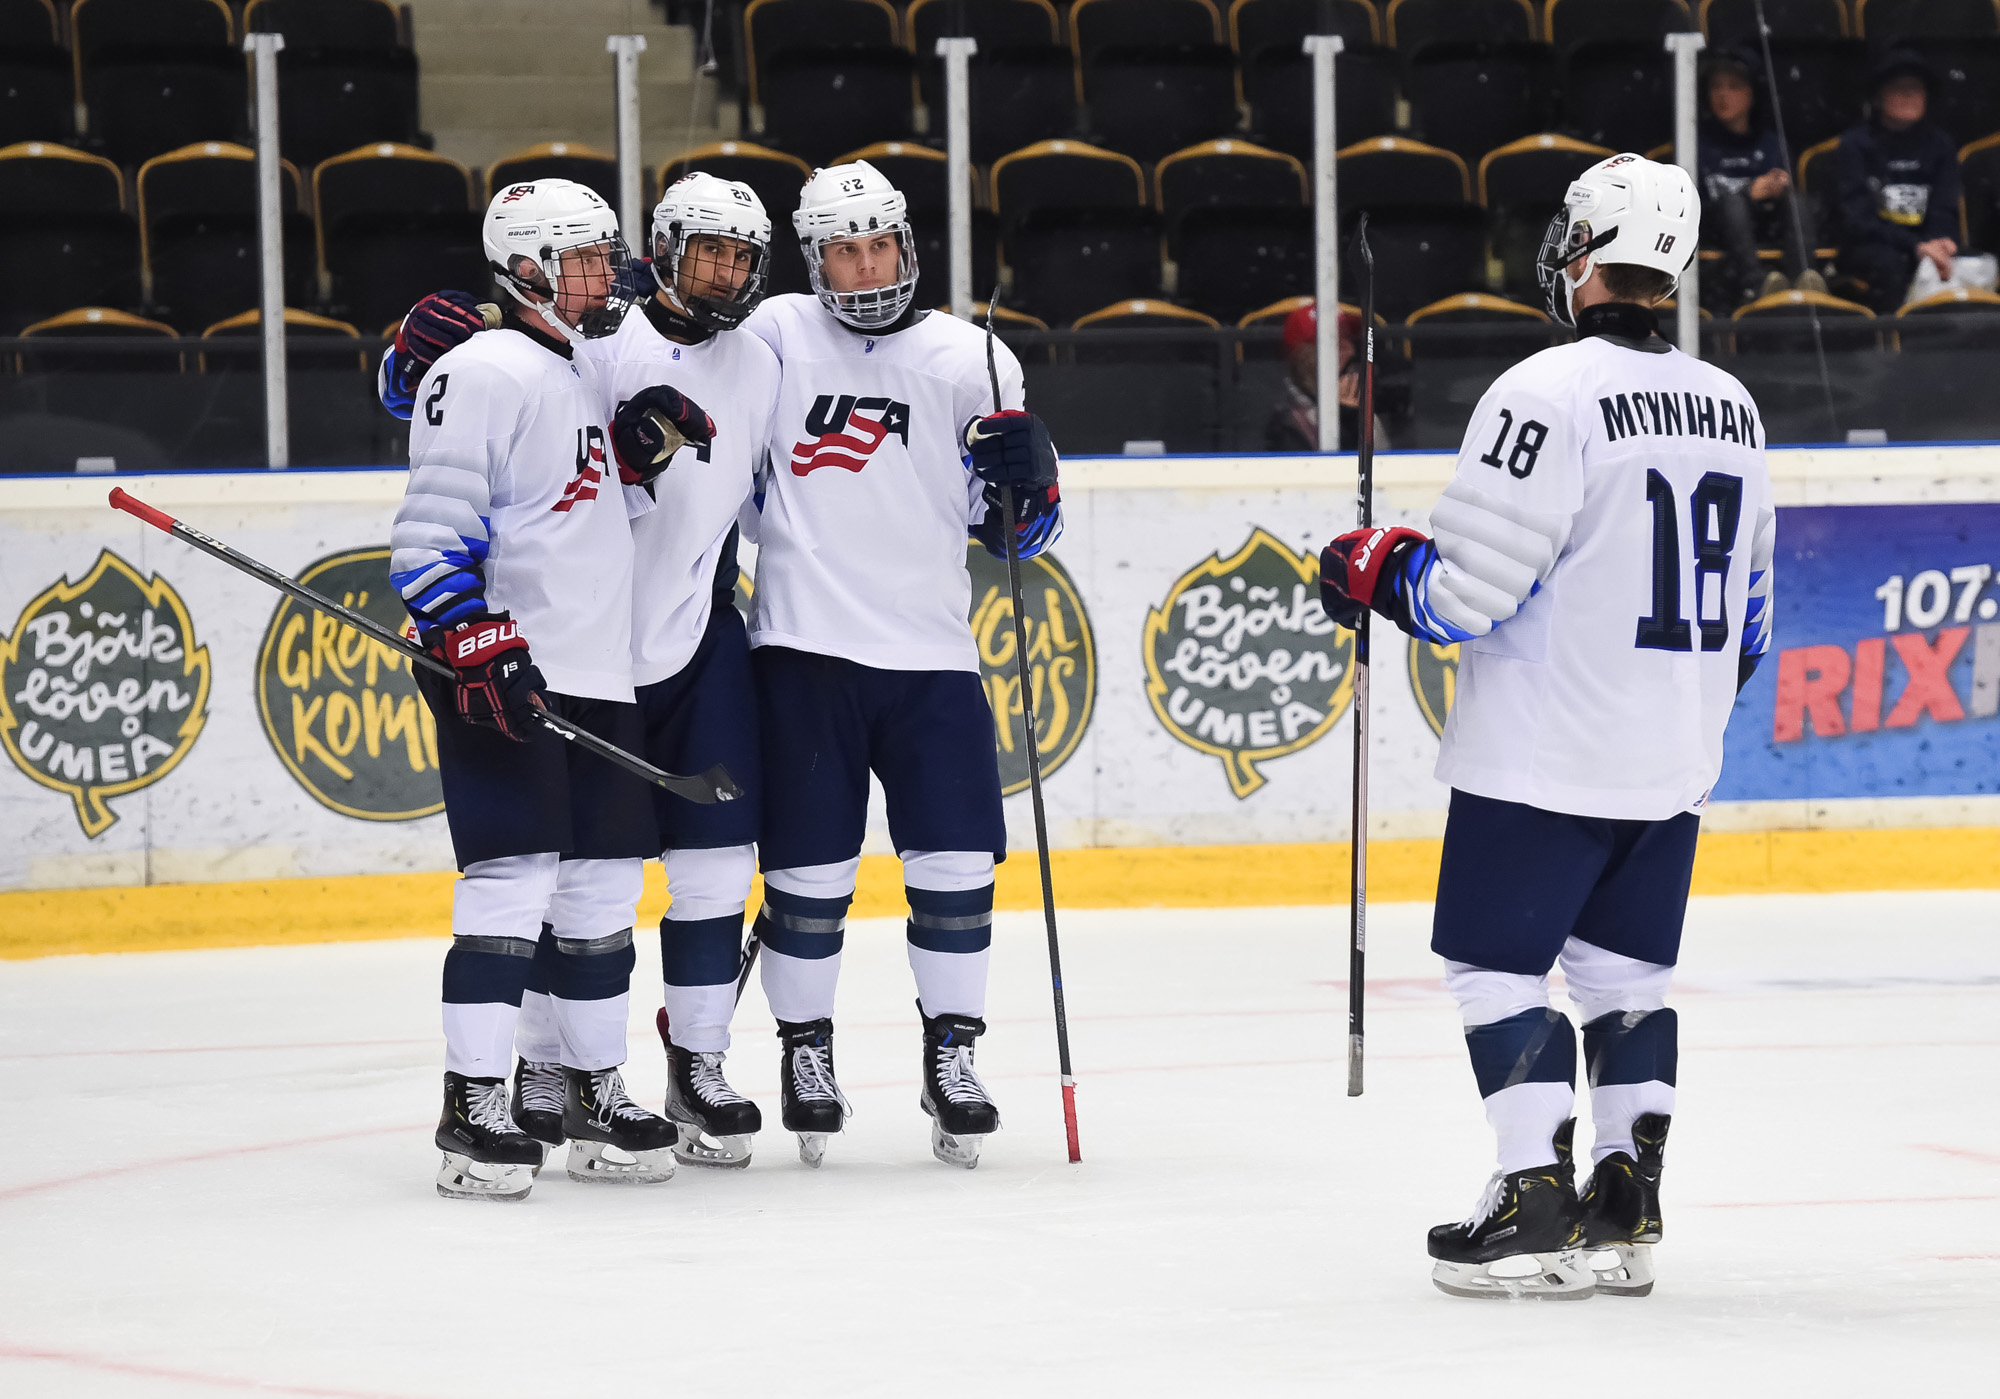 IIHF USA outlasts Russia